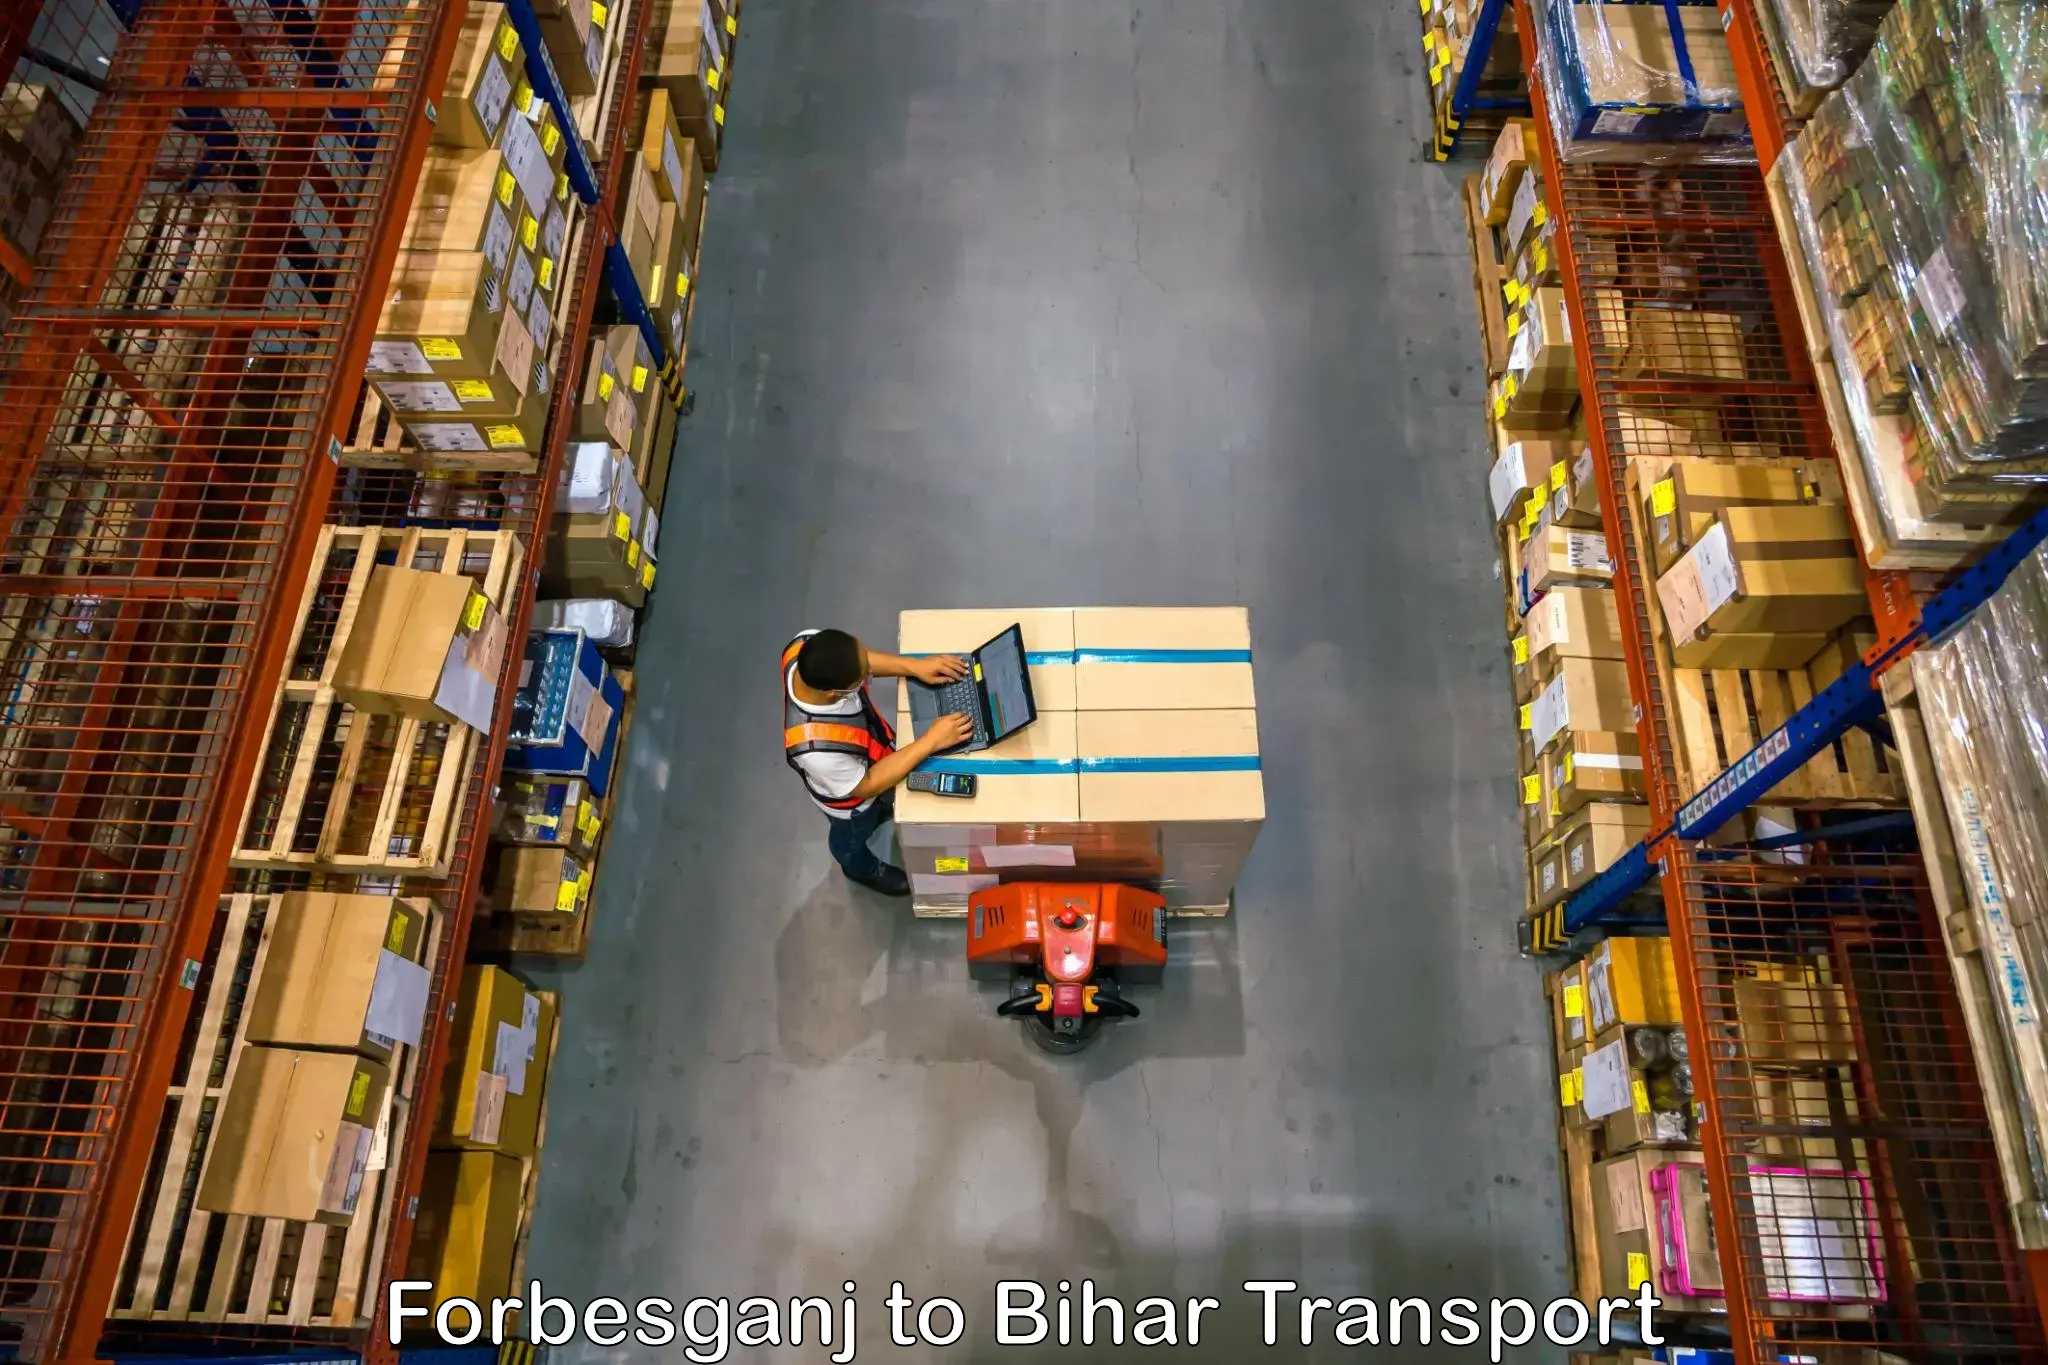 Truck transport companies in India Forbesganj to Buxar